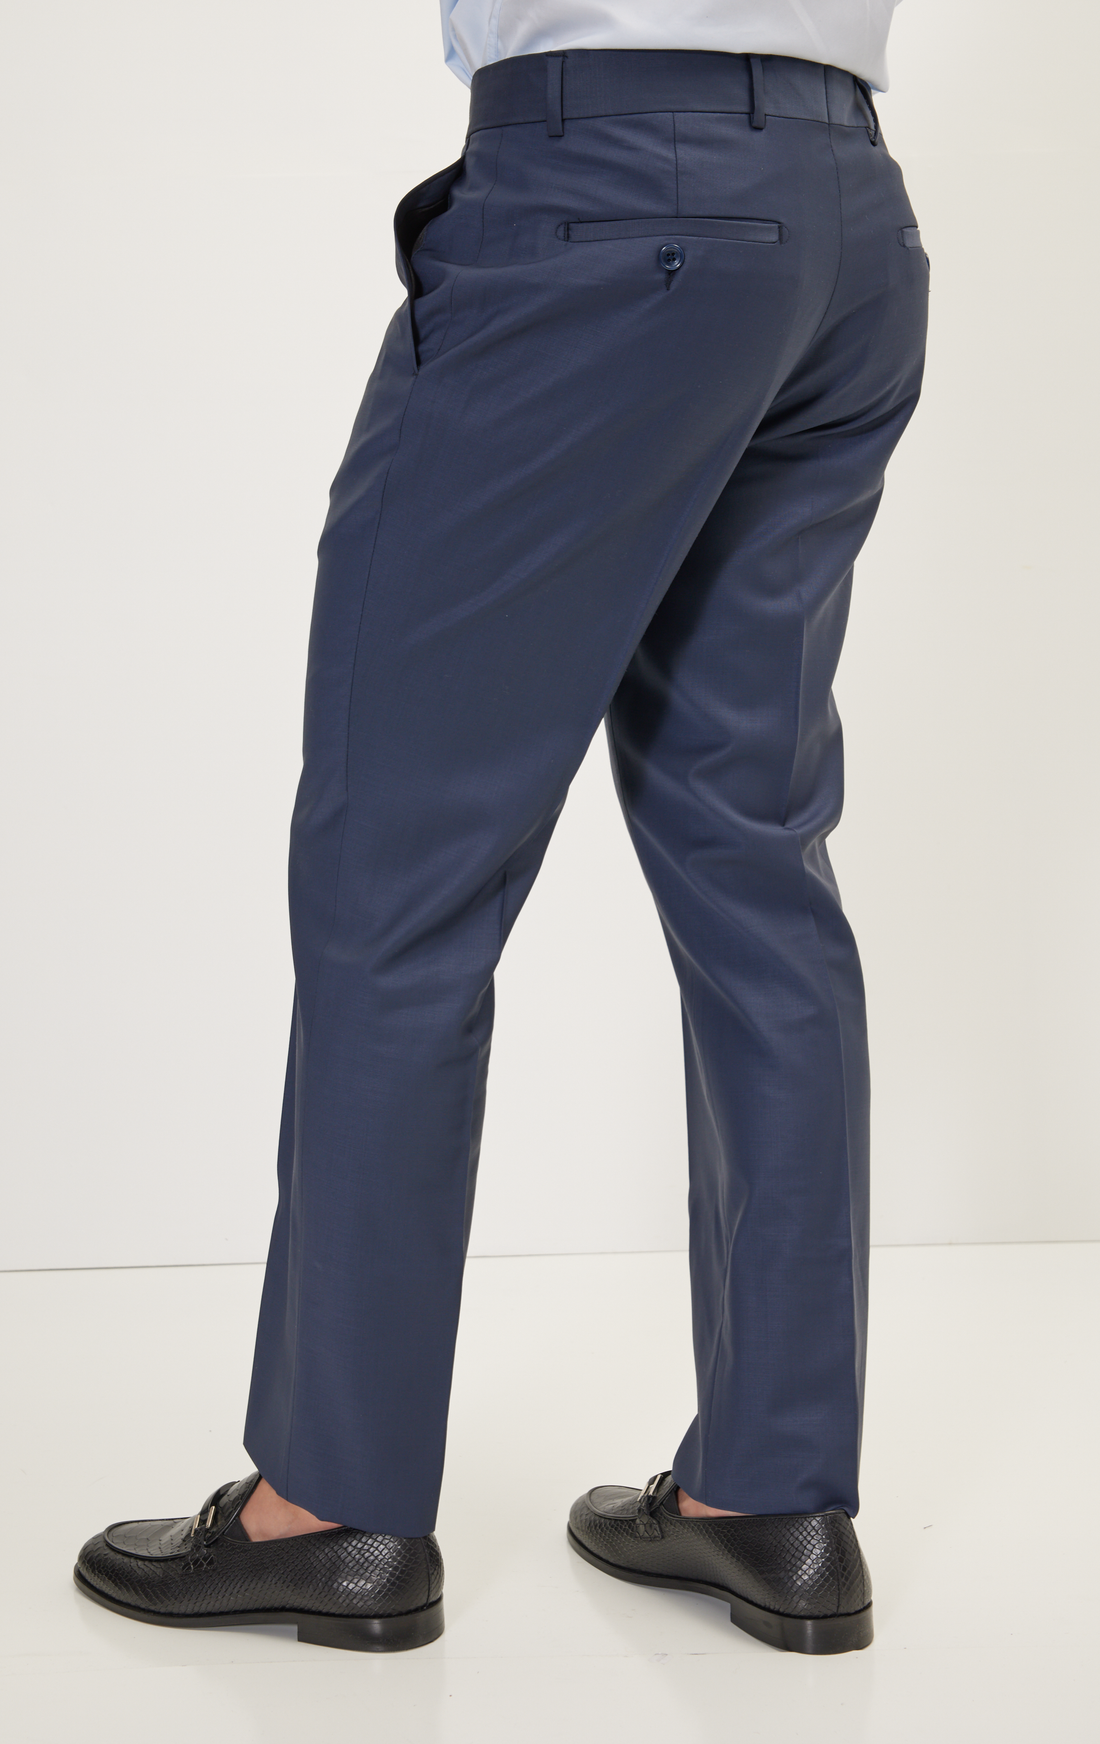 Pantalones de vestir de lana merino - Azul oscuro